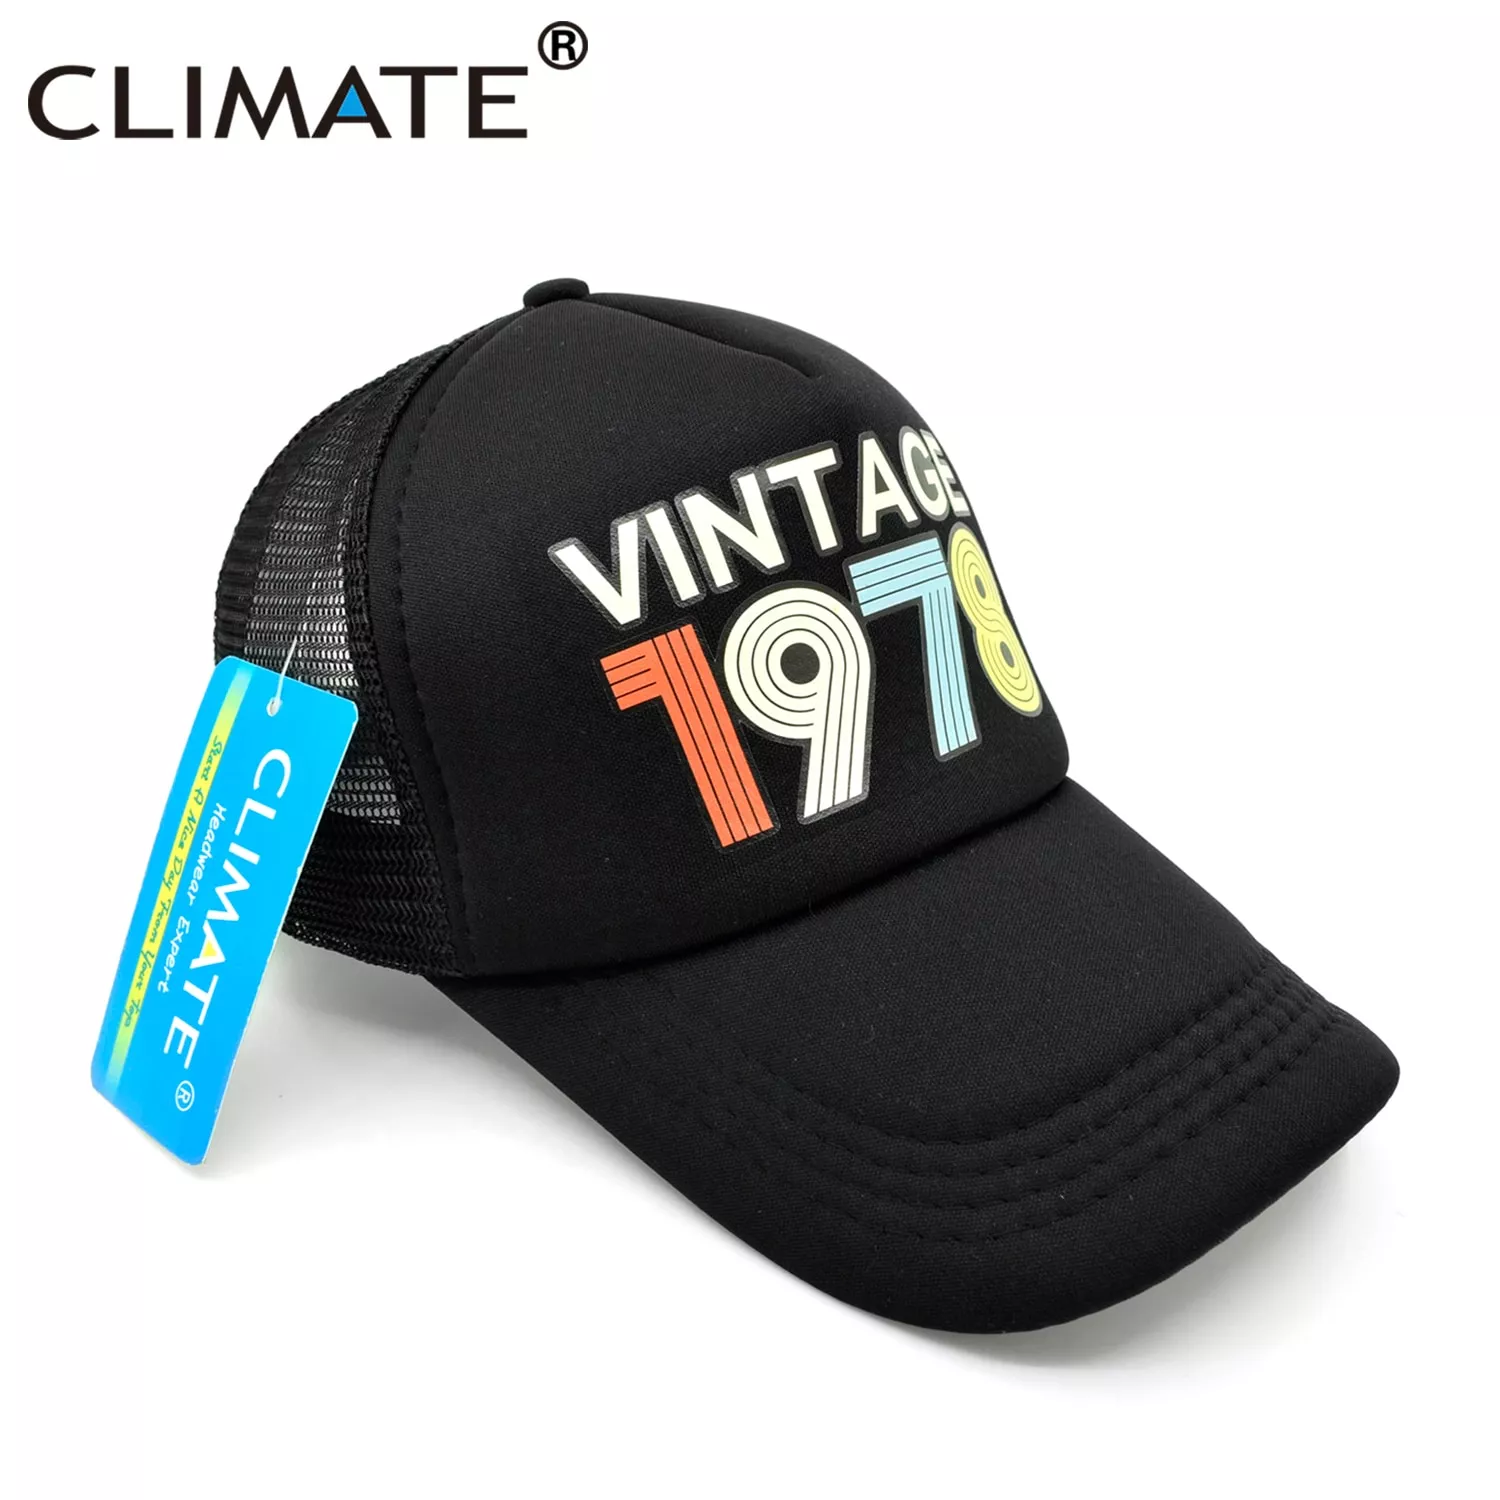 Clima-vintage-1978-bon-1978-vintage-bon-de-caminhoneiro-masculino-retro-40th-presente-de-aniversrio-33012398711-3